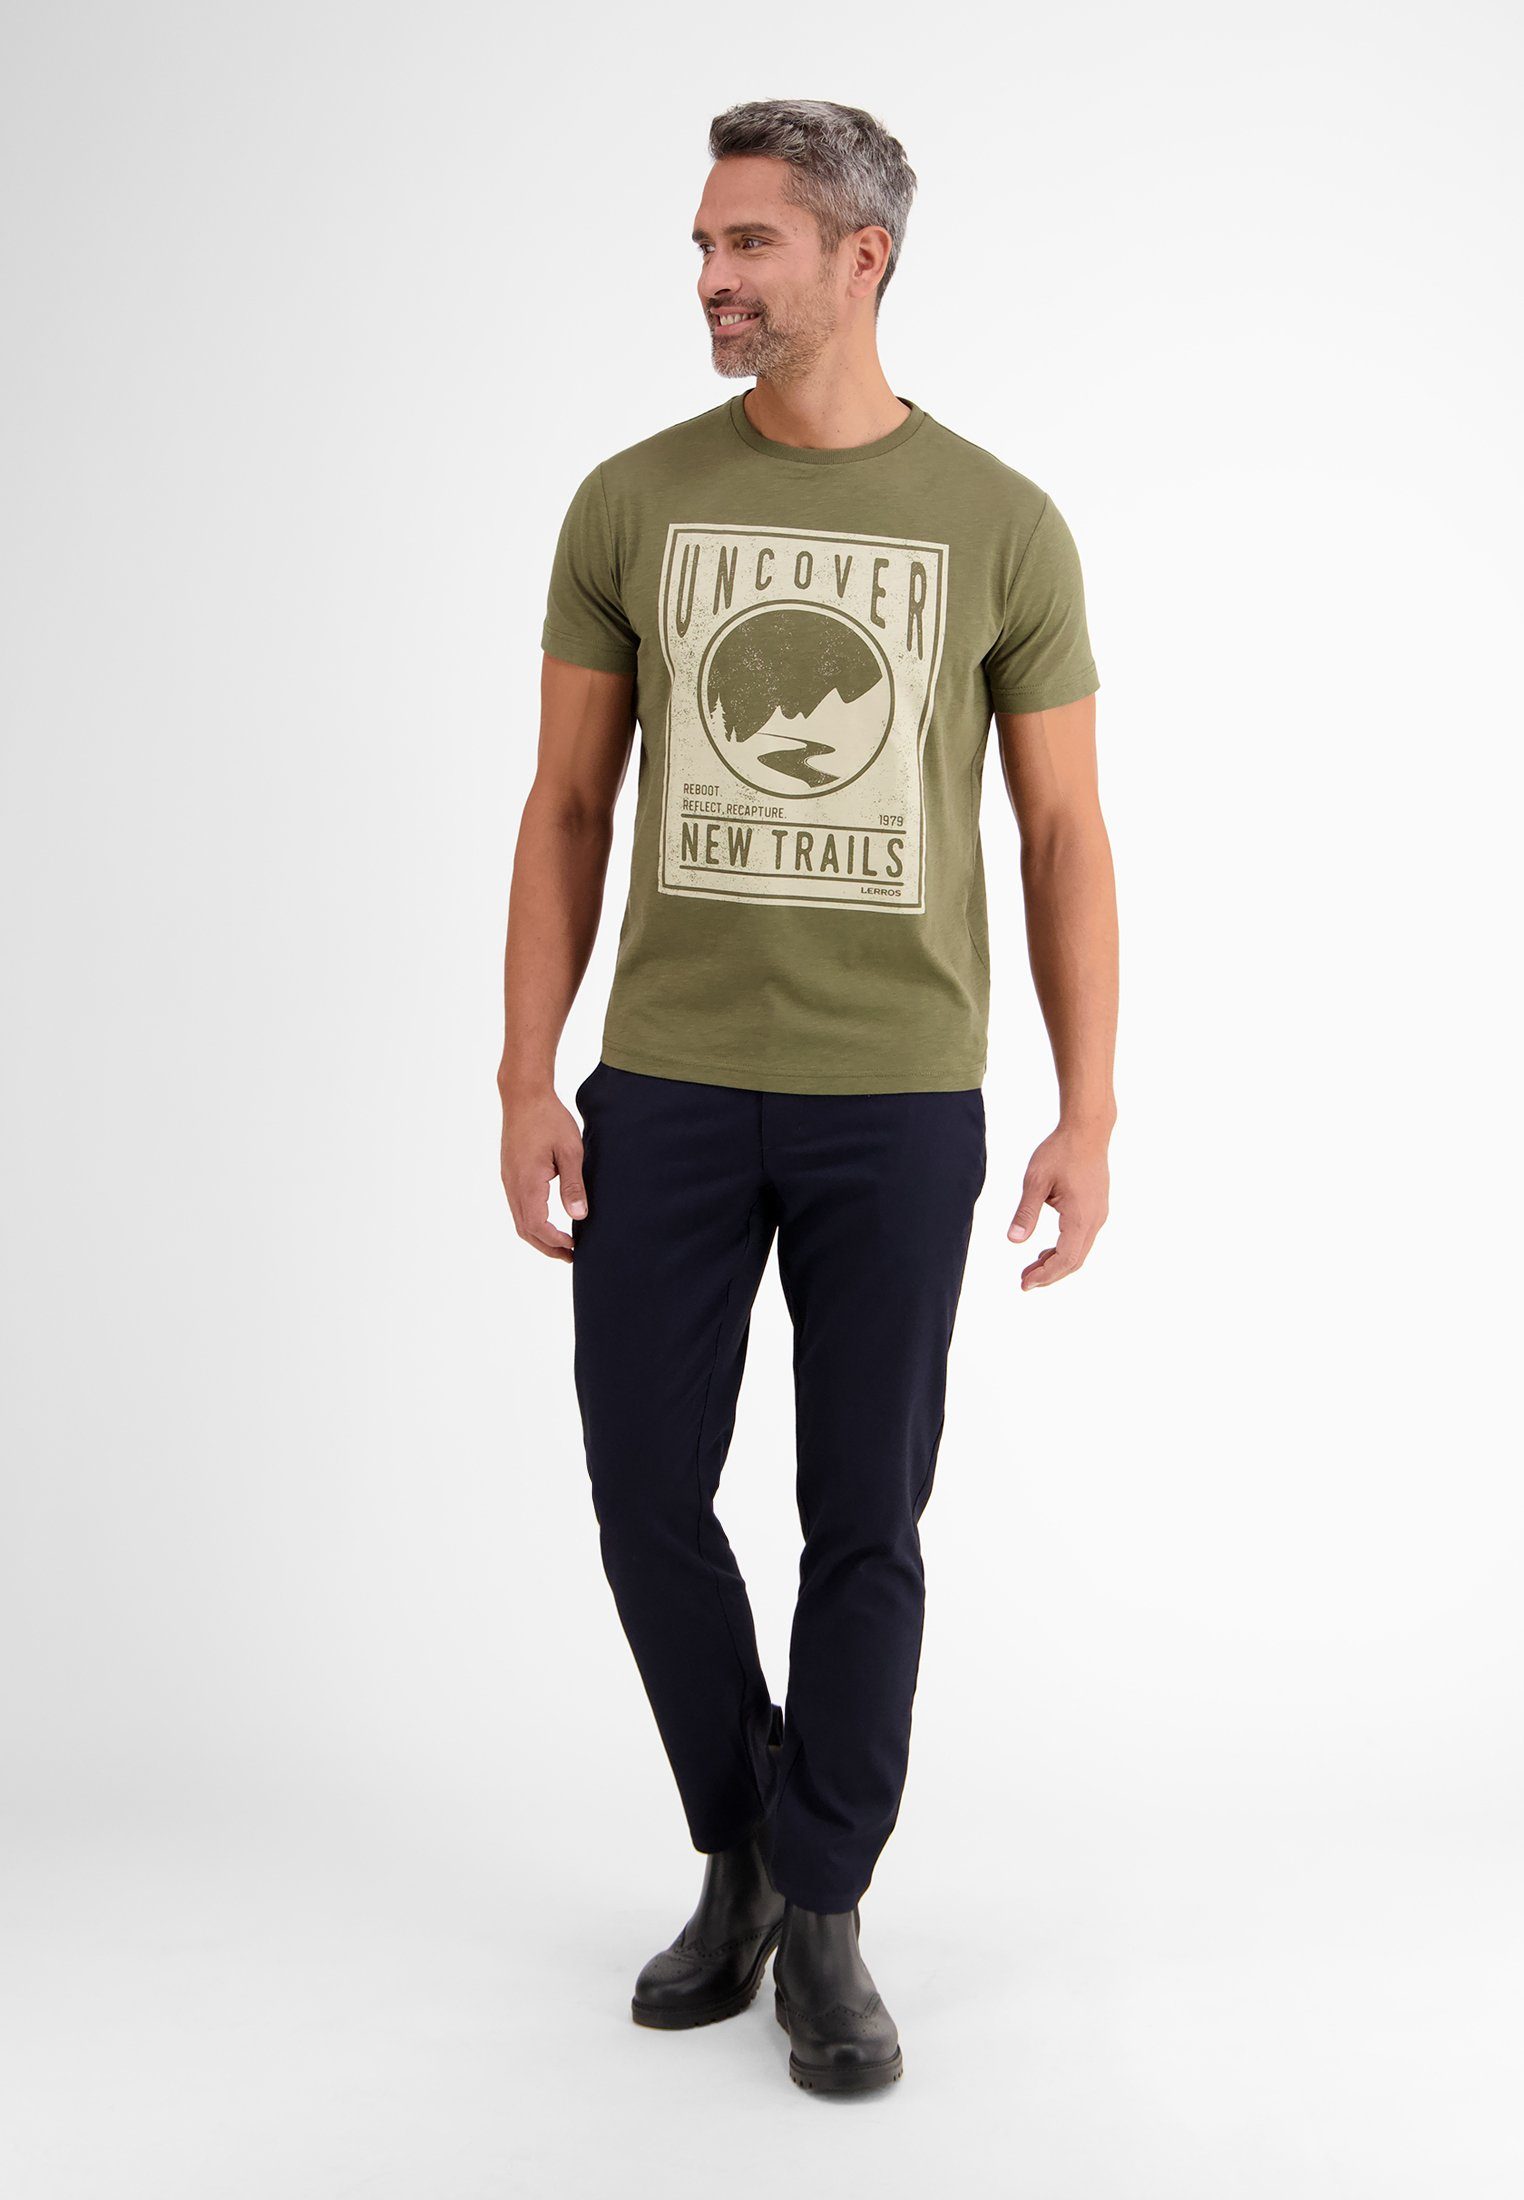 LERROS LERROS T-Shirt Print-T-Shirt GREEN *Uncover OLIV trails* new